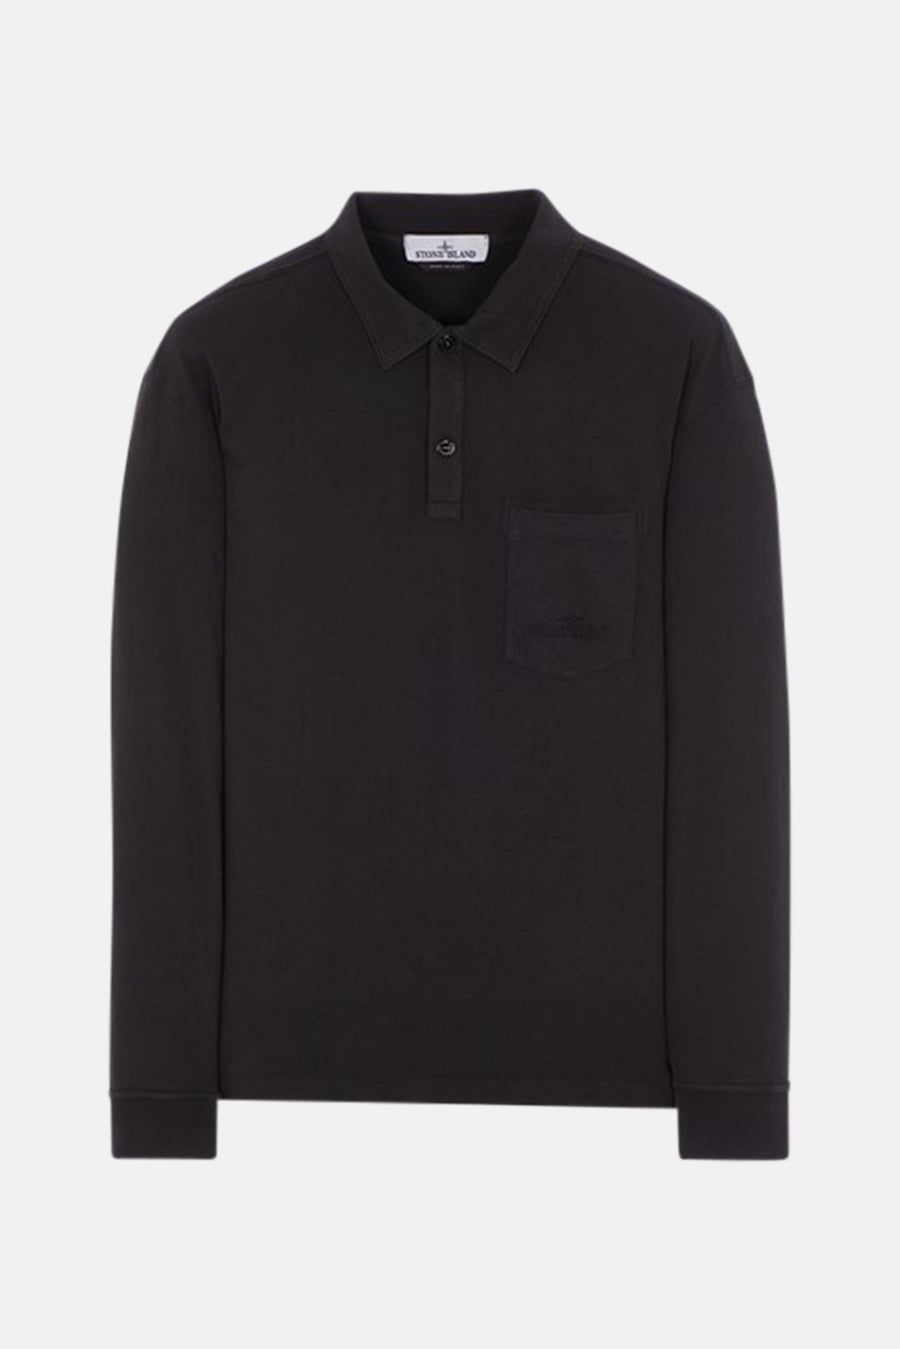 Garment Dyed Long Sleeve Polo Black